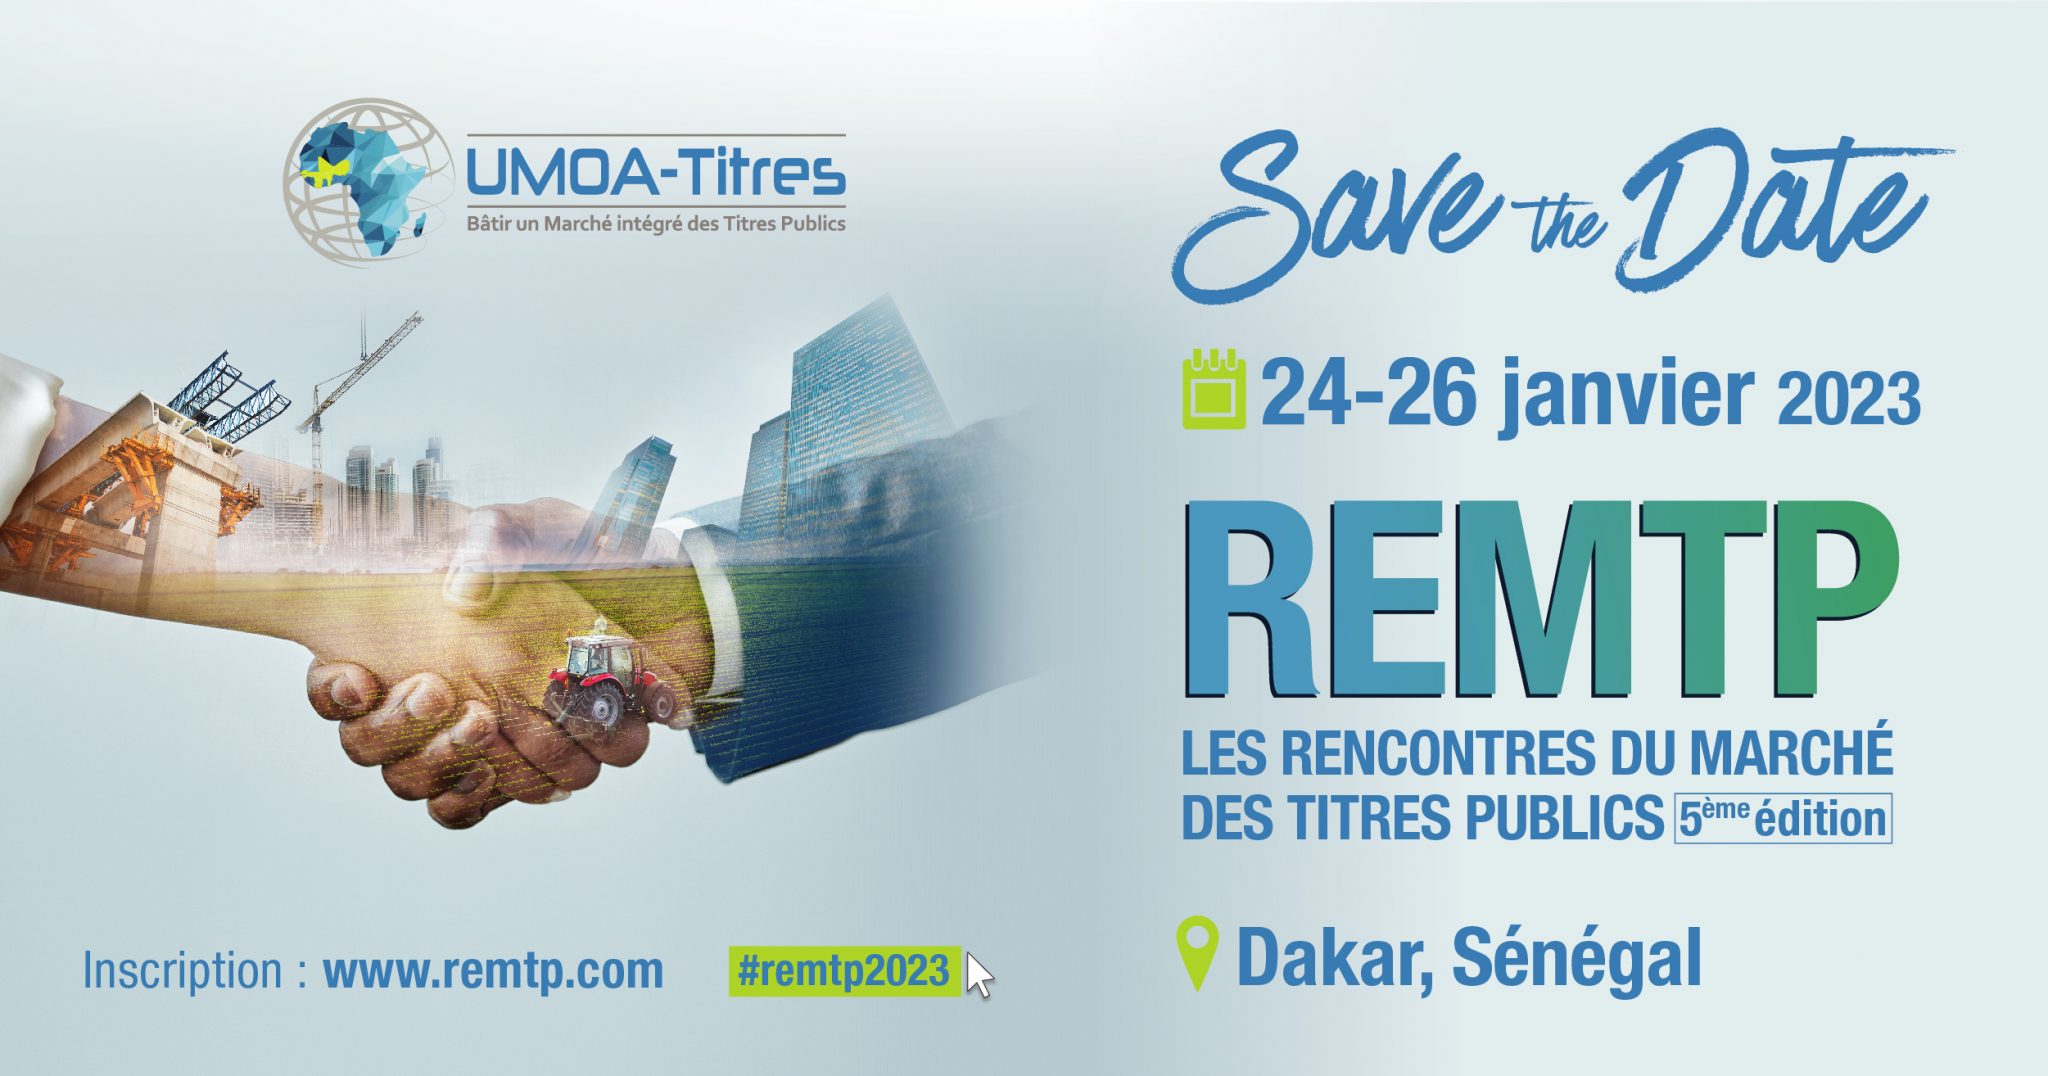  UEMOA public securities market meetings: nearly 200 regional and international players expected in Dakar 